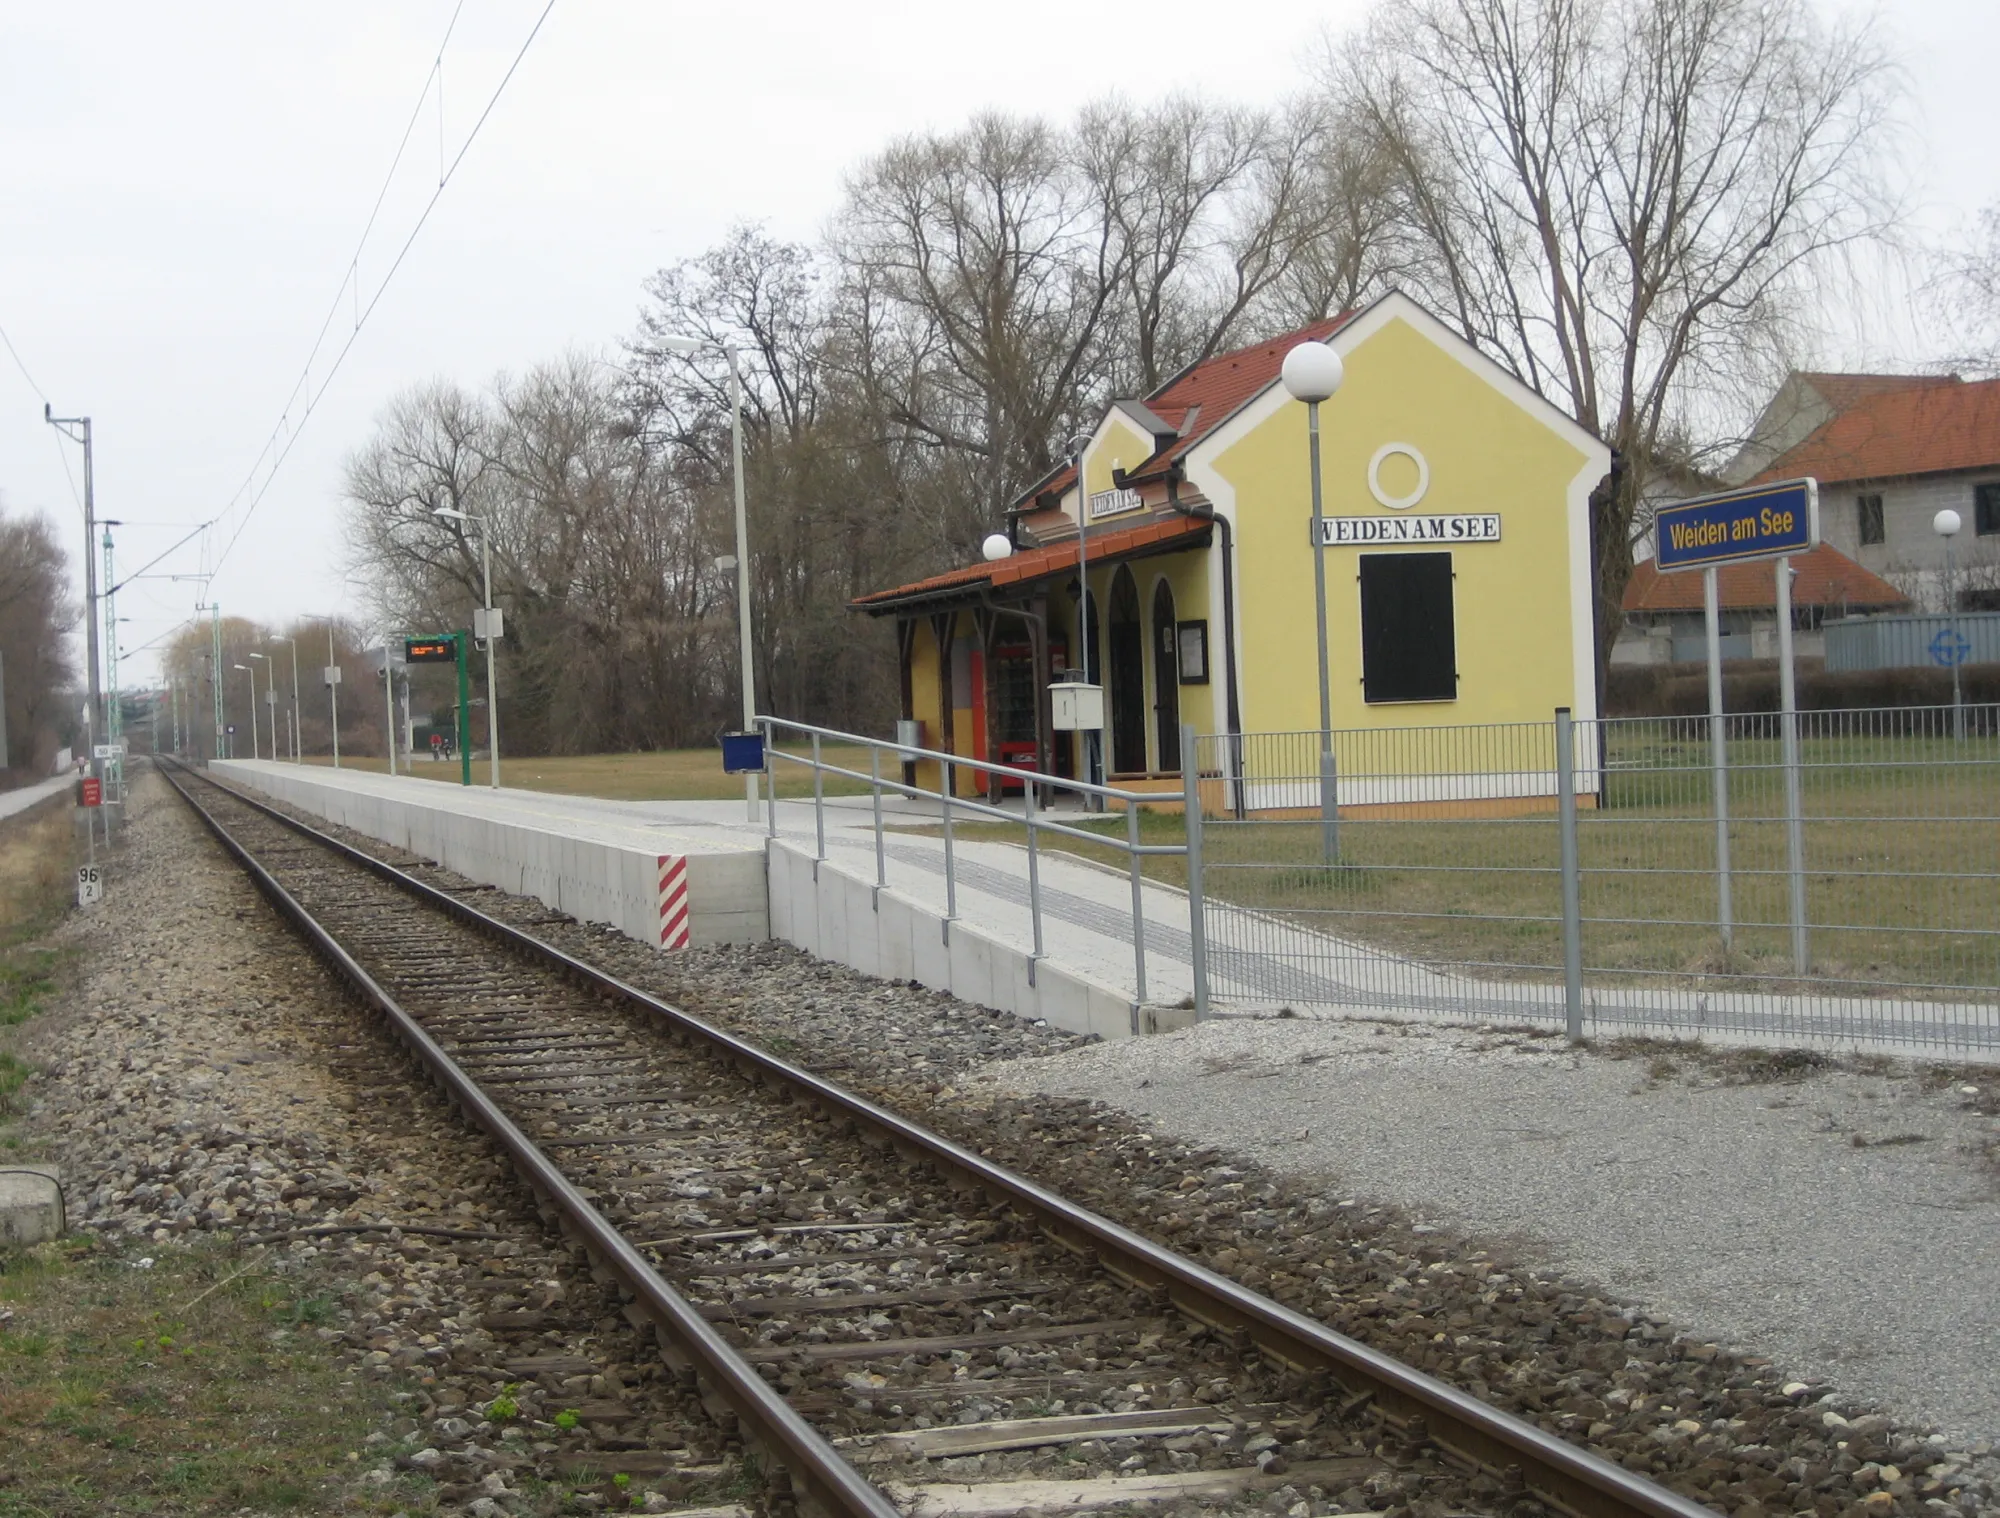 Photo showing: Train station Weiden am See in Burgenland